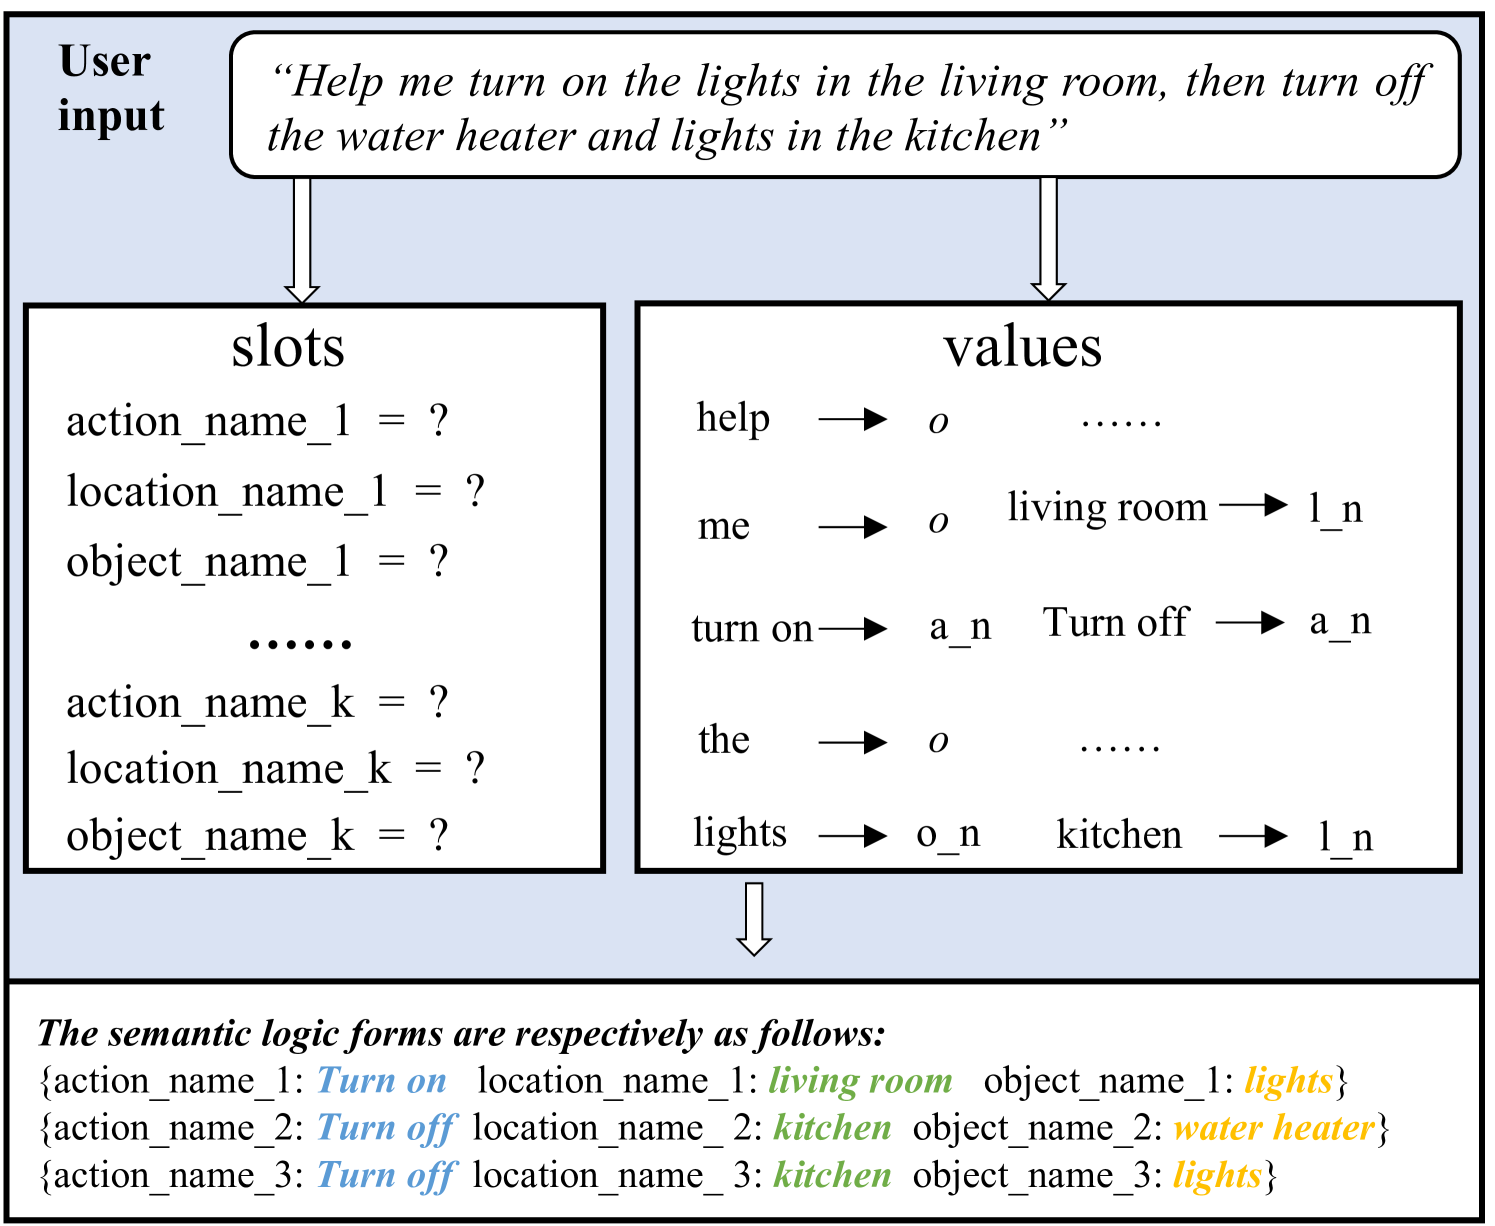 SLFNet: Generating Semantic Logic Forms from Natural Language Using Semantic Probability Graphs